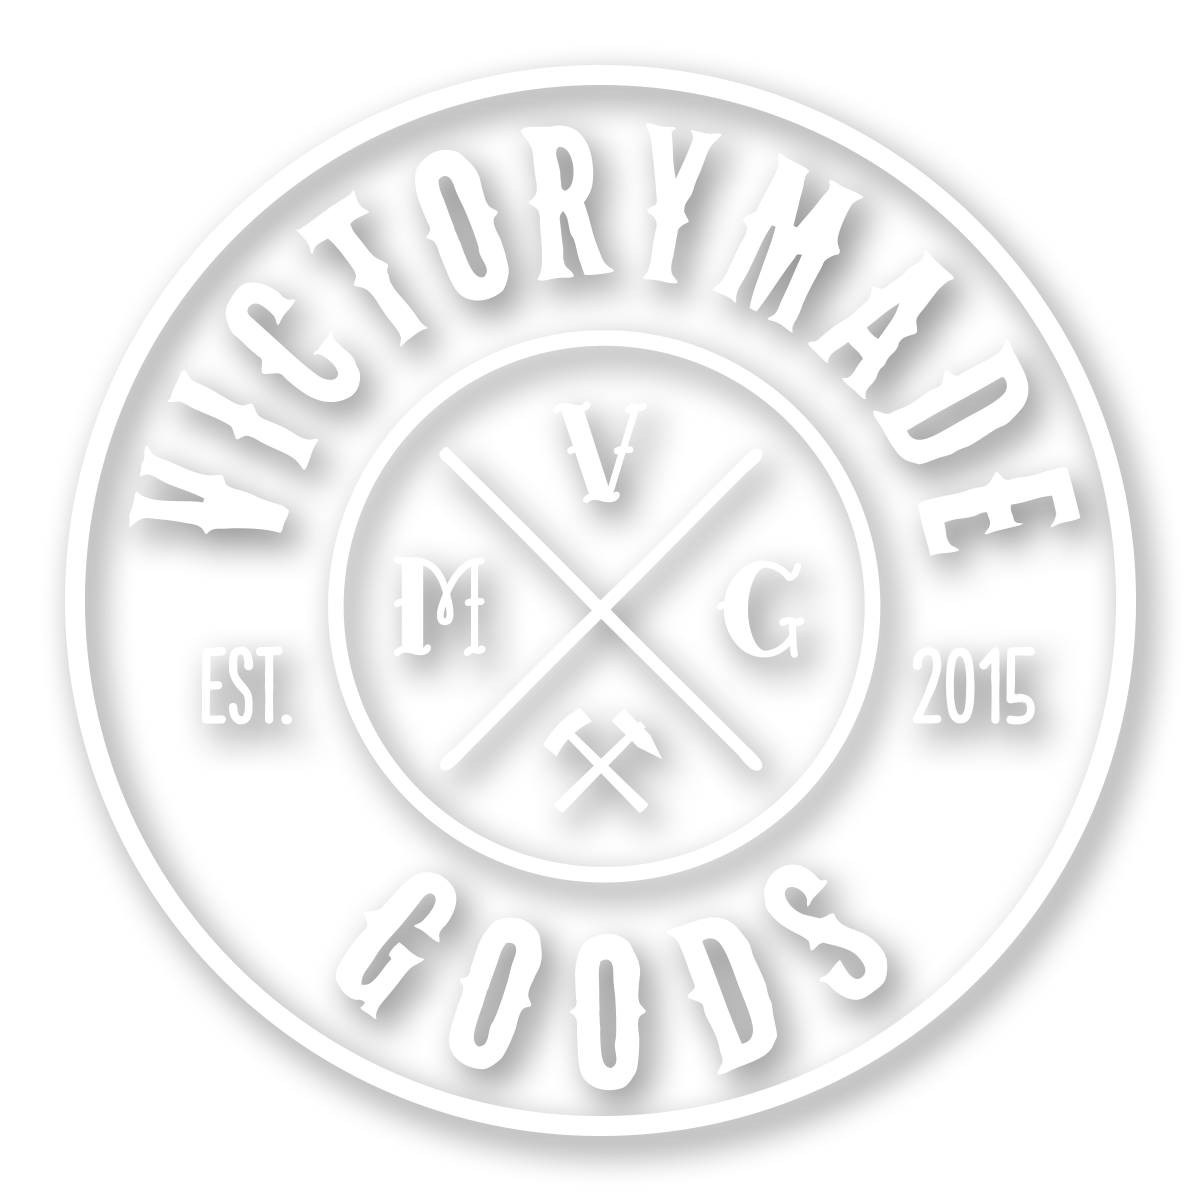 Victorymade Badge Die Cut Sticker White - Victorymade Goods